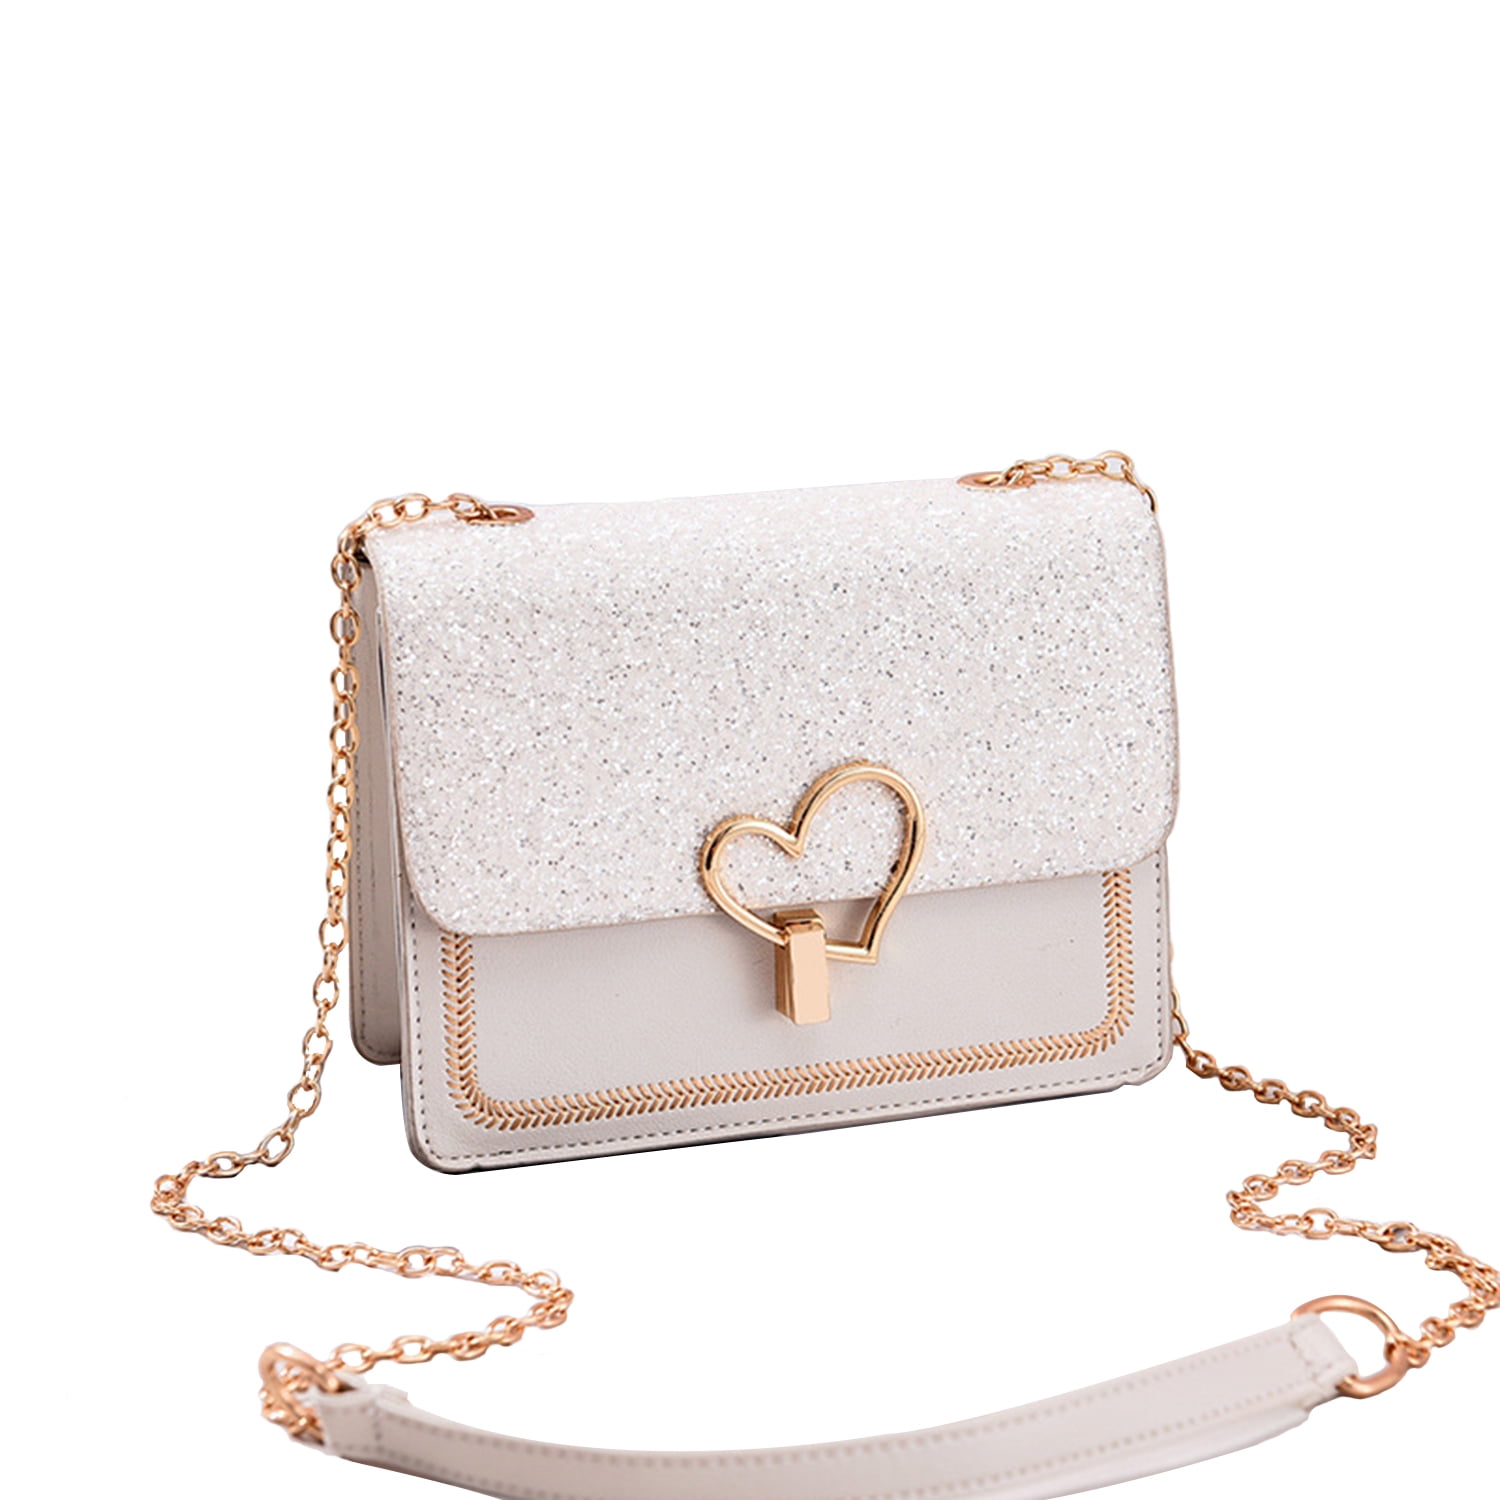 Purse PU Leather Sequin Handbags with Gold Chain Strap White d49f2559 0563 4f50 9863 377641aa32cb.8a20854e0caa7b84ff51056d93a83049